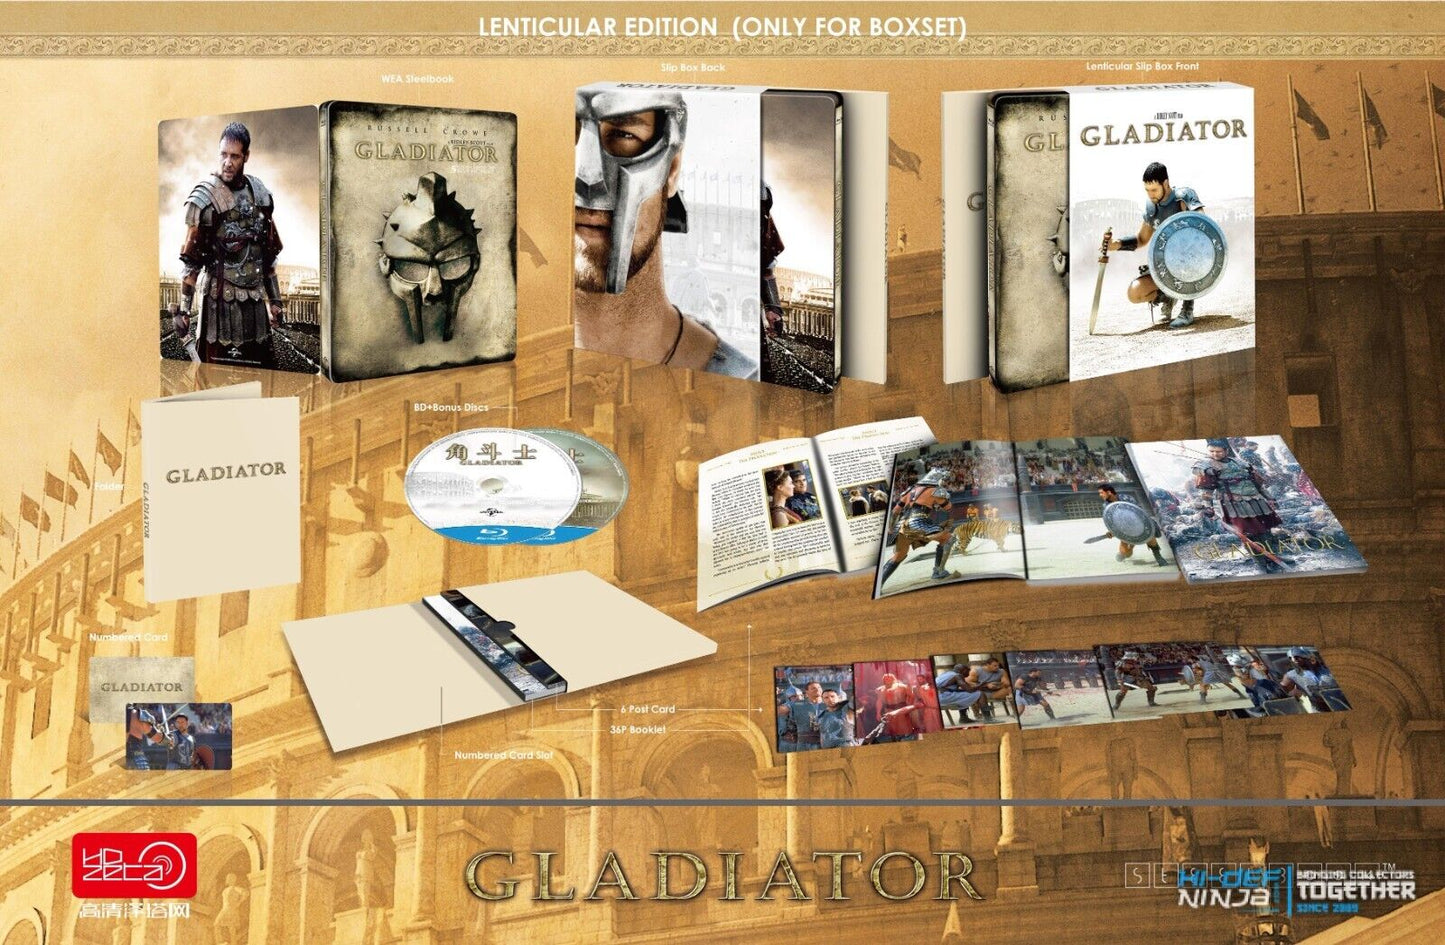 Gladiator 4K Blu-ray Steelbook HDzeta Exclusive Gold Label One Click Box Set